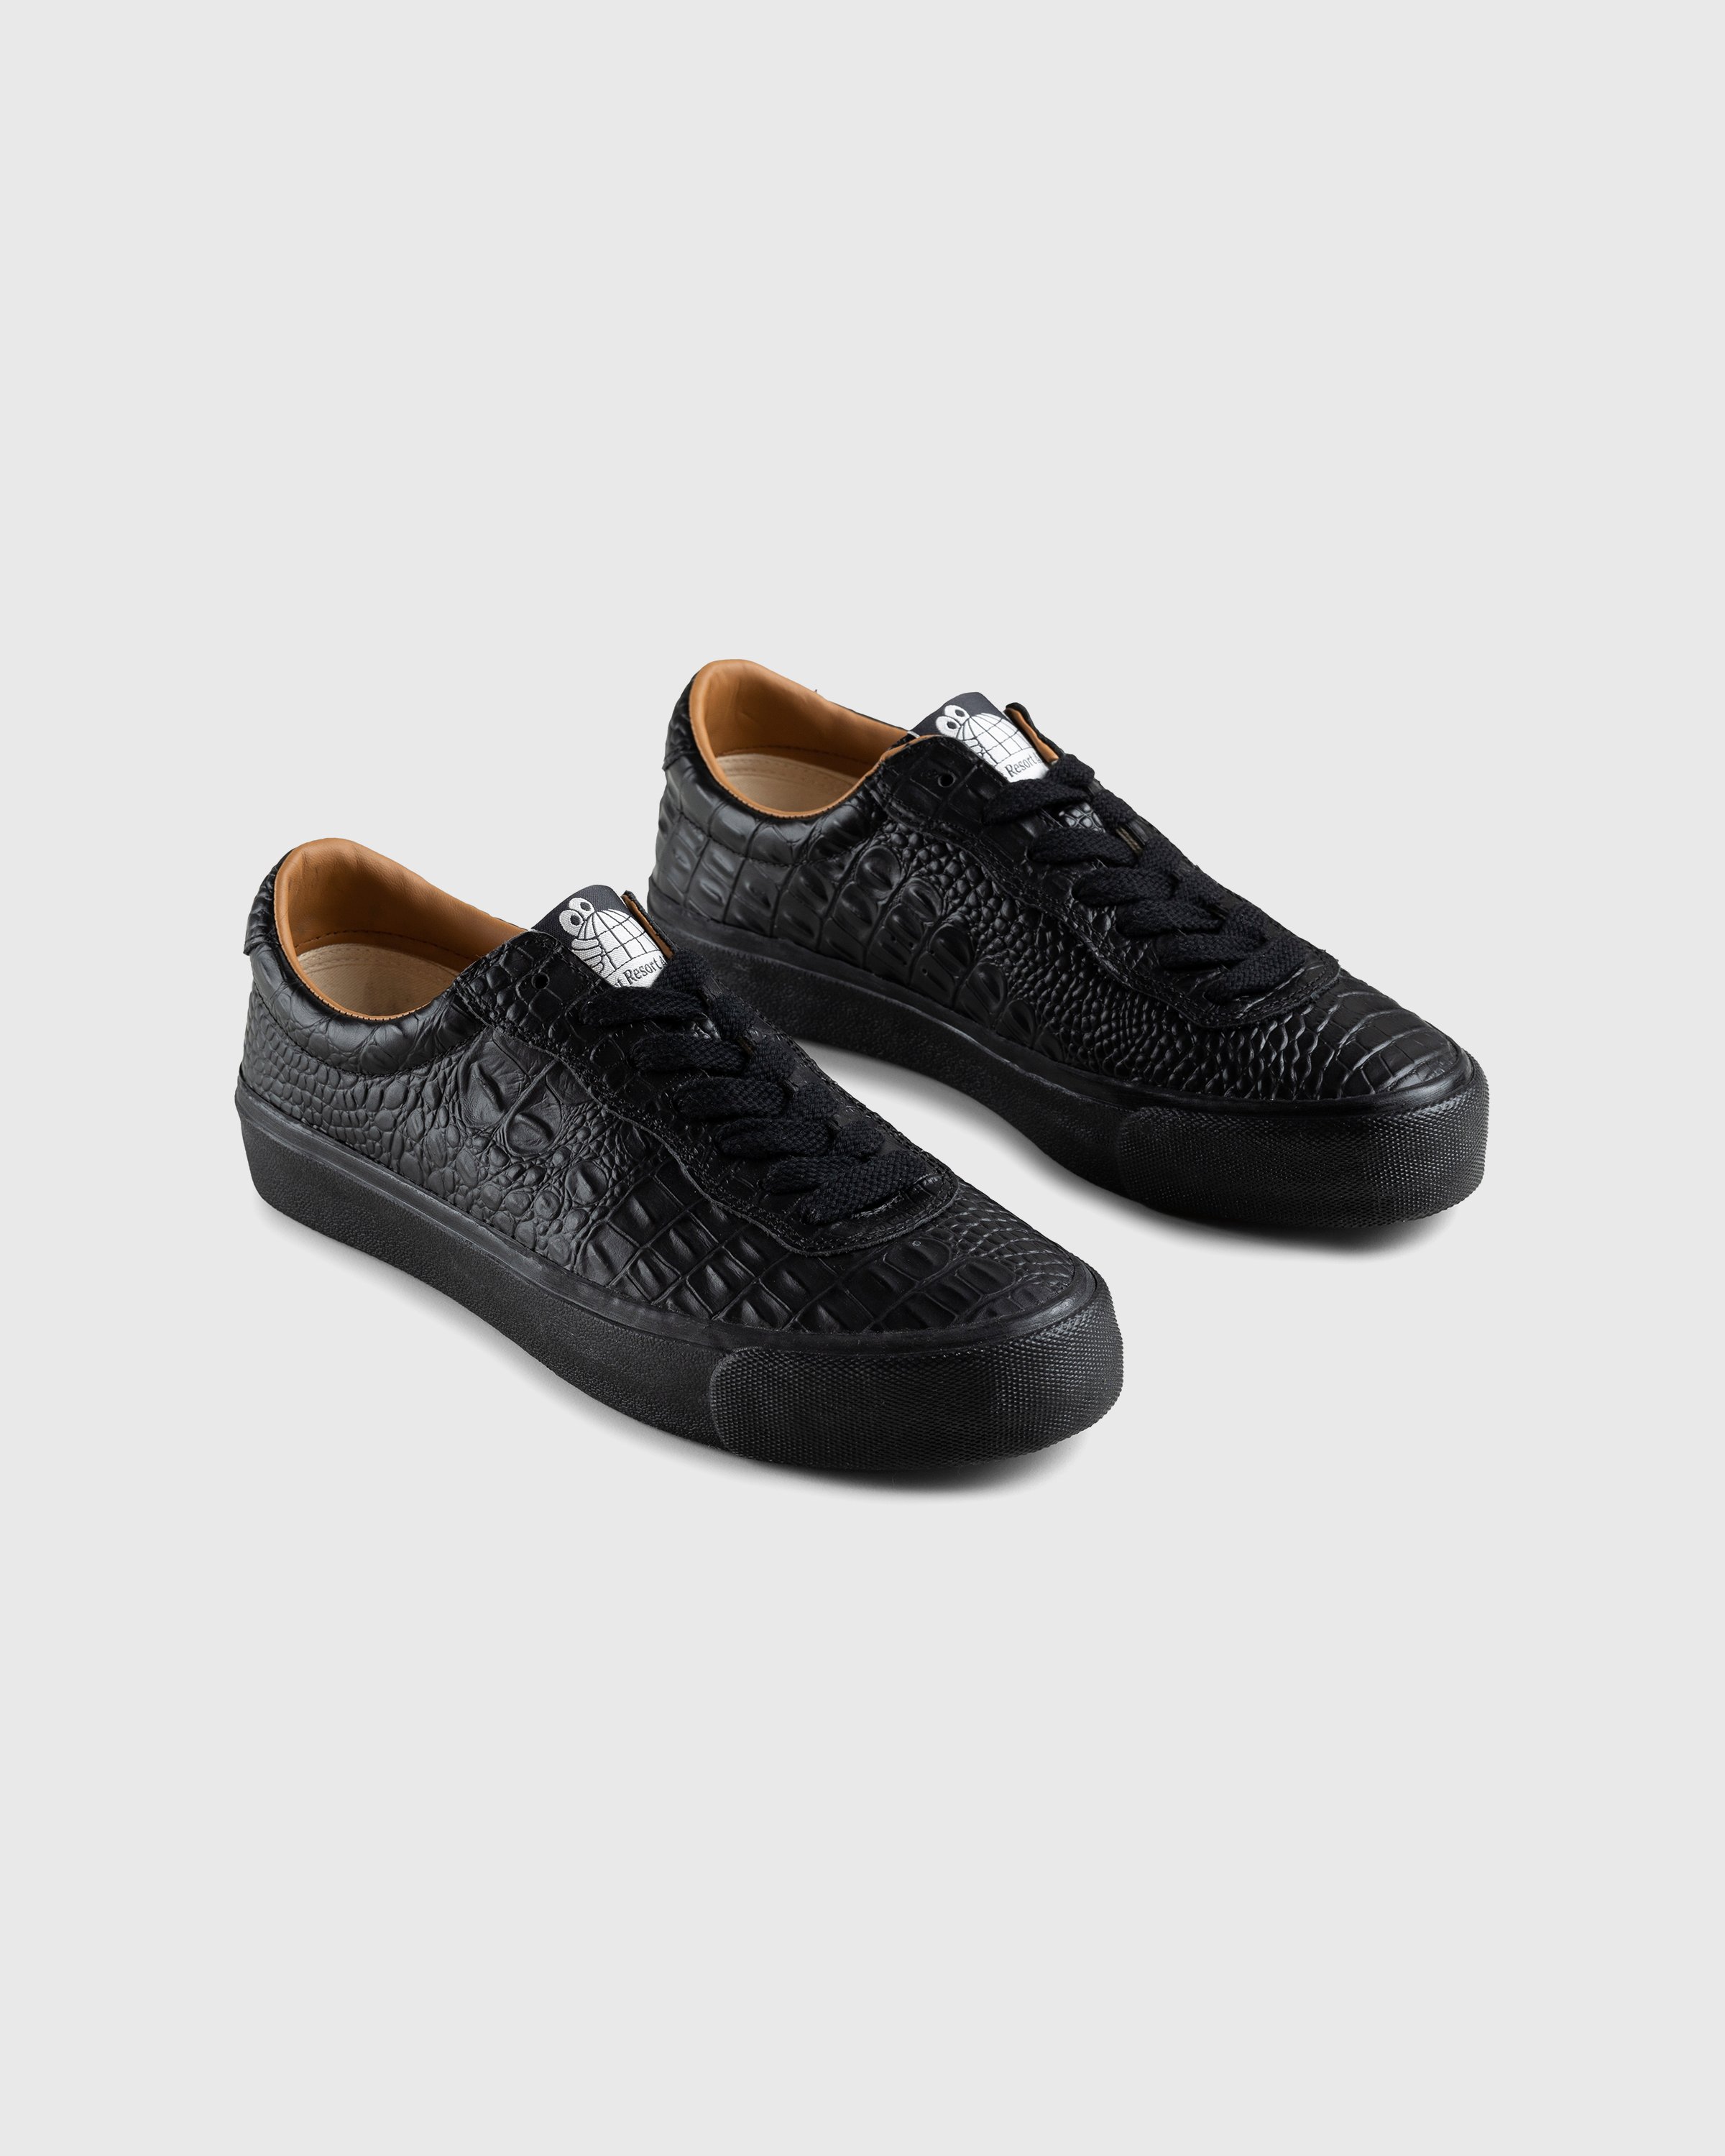 Last Resort AB - VM001-Croc LO Black/Black - Footwear - Black - Image 3